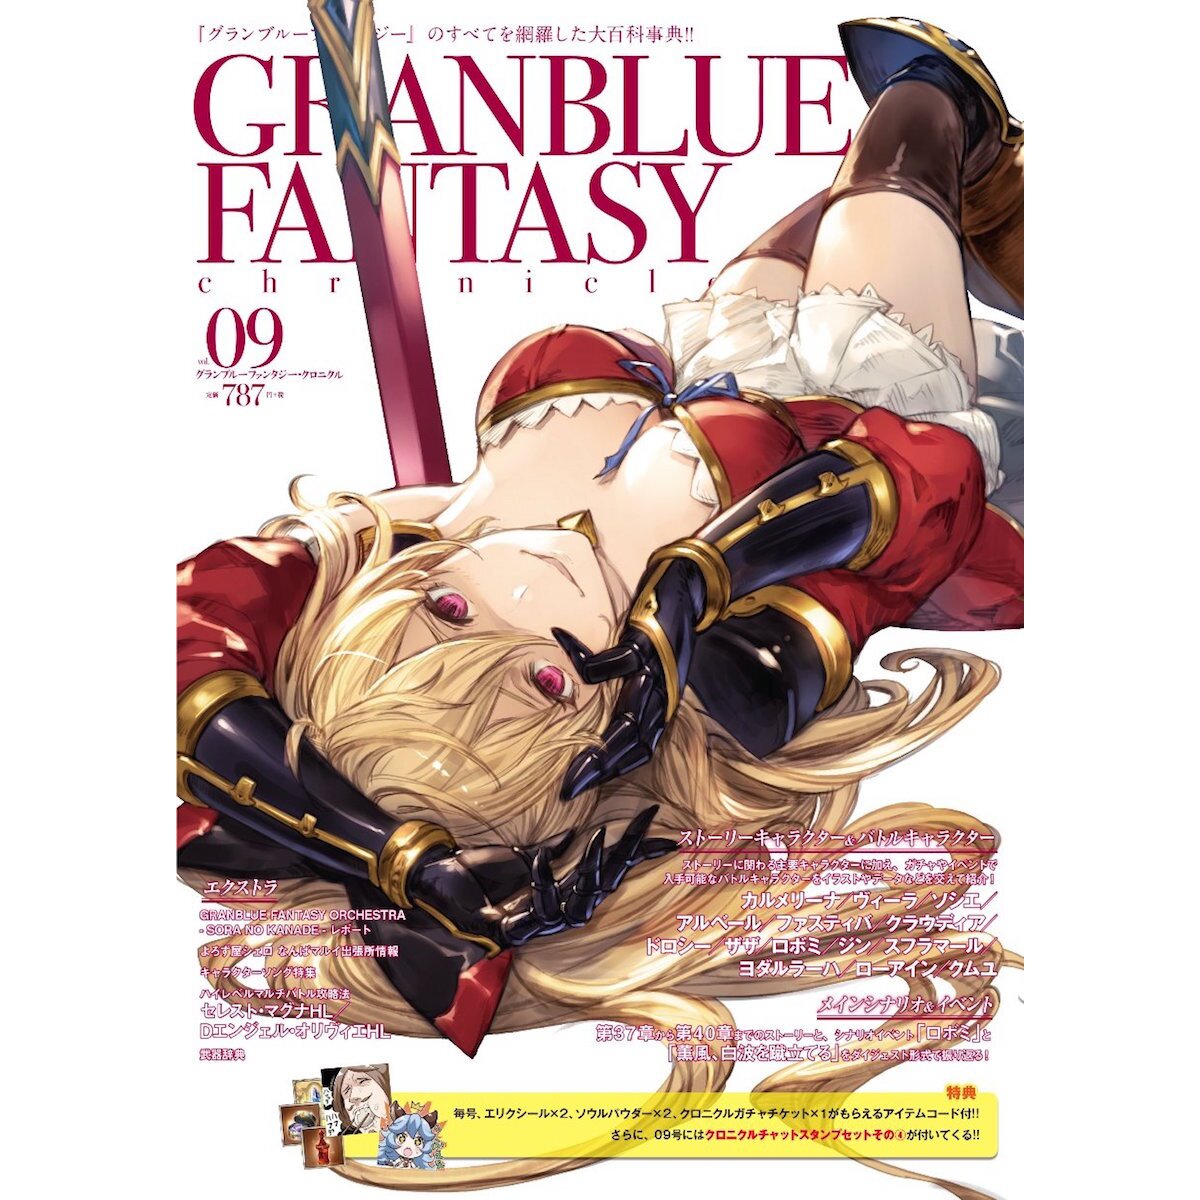 Granblue Fantasy Manga Volume 2